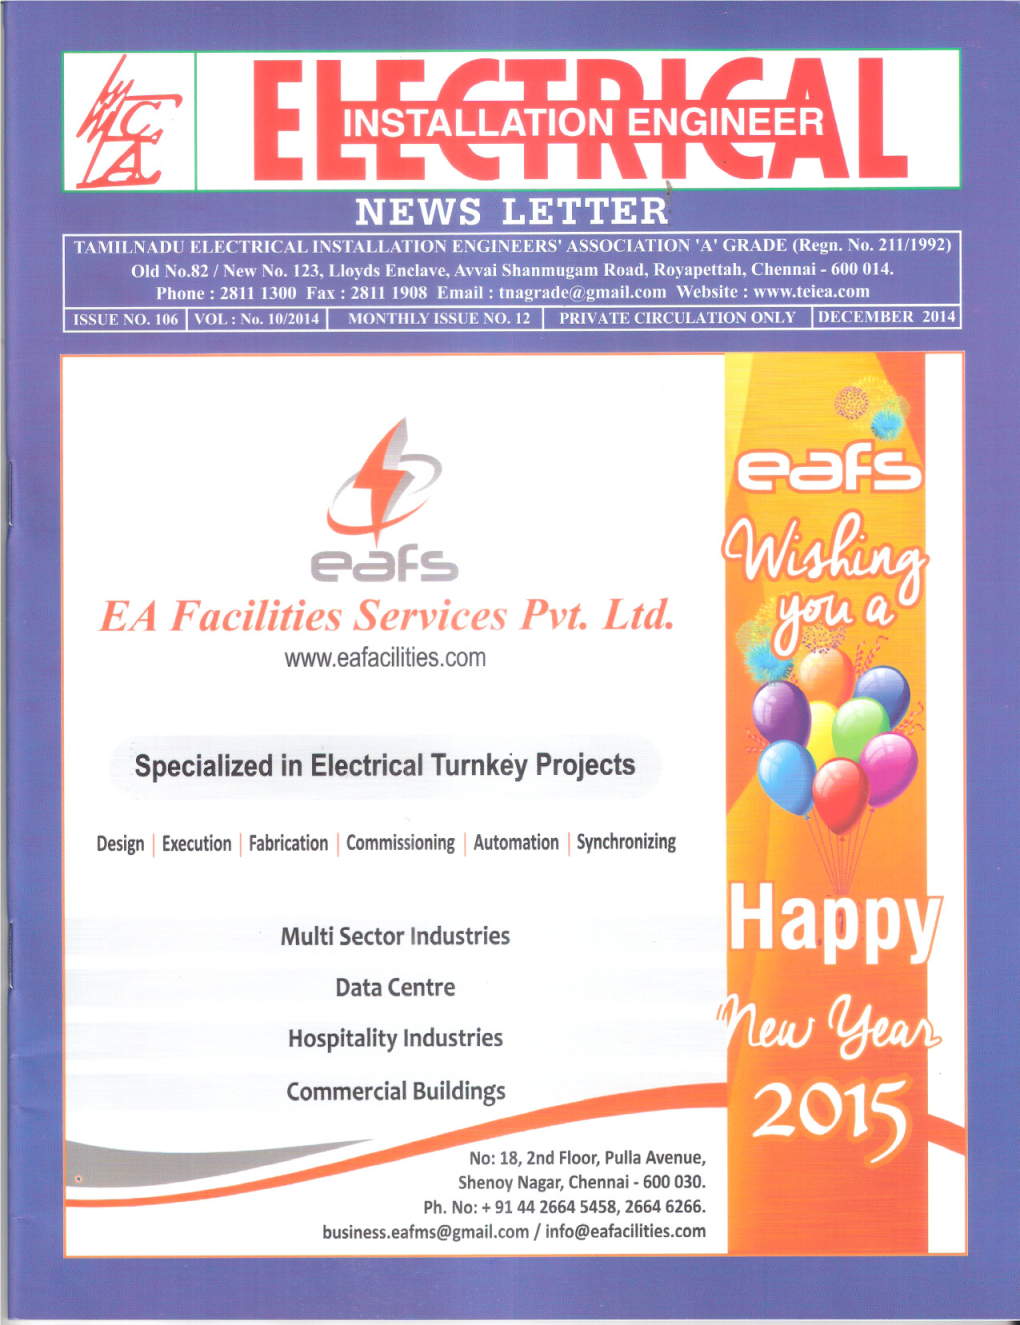 Tamilnadu Electrical Installation Engineers Association ‘A’ Grade